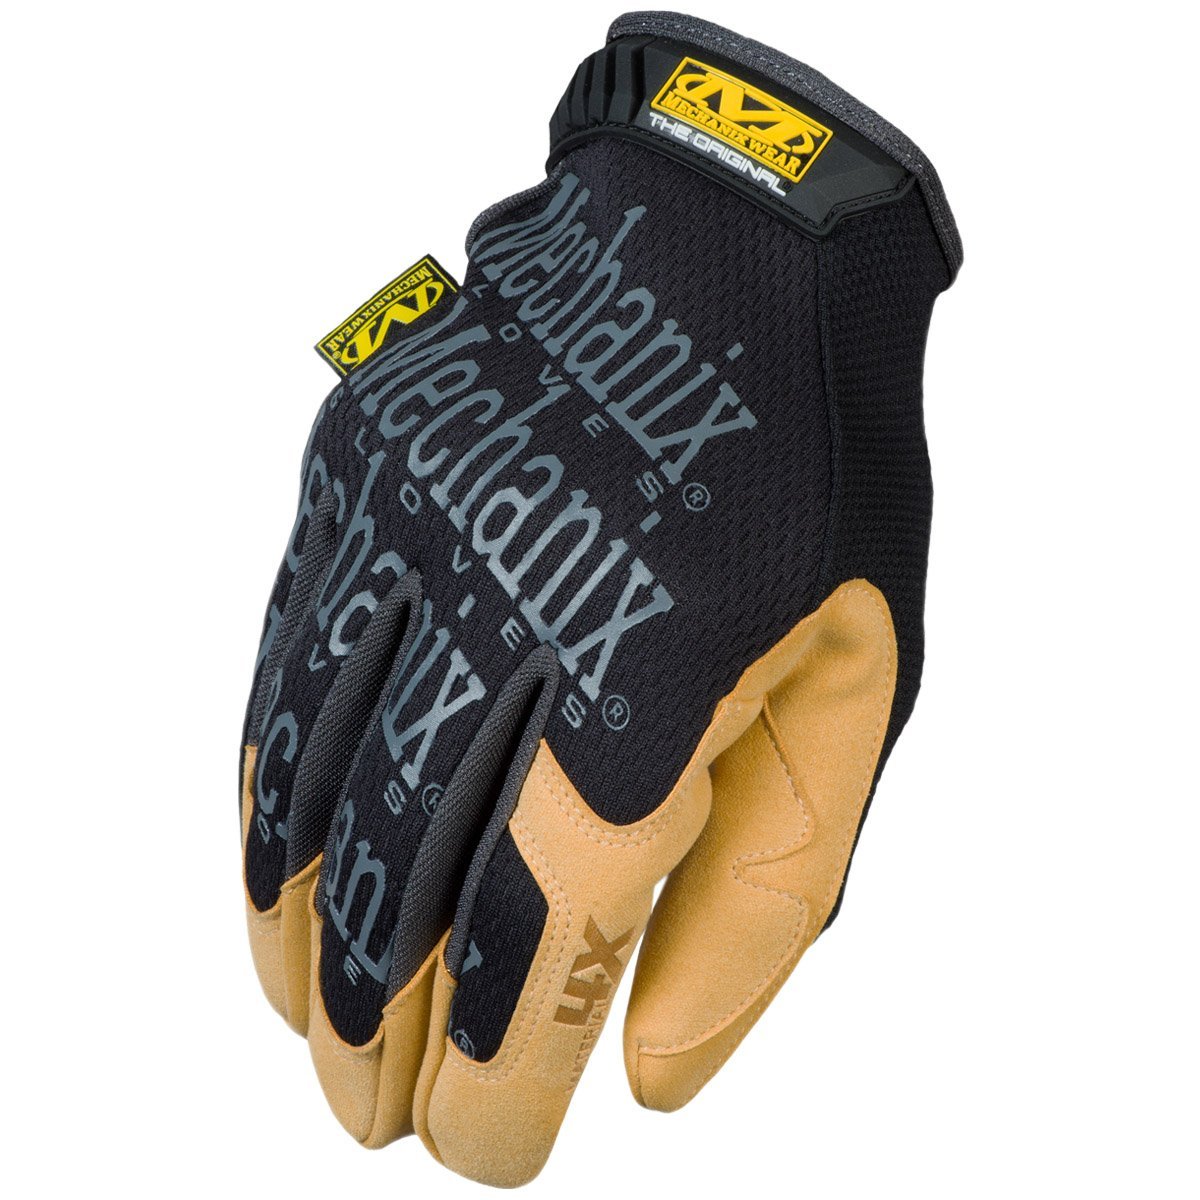 Mechanix Wear MG4X-75-010 Material 4X Original Gloves, Black/Tan, Large